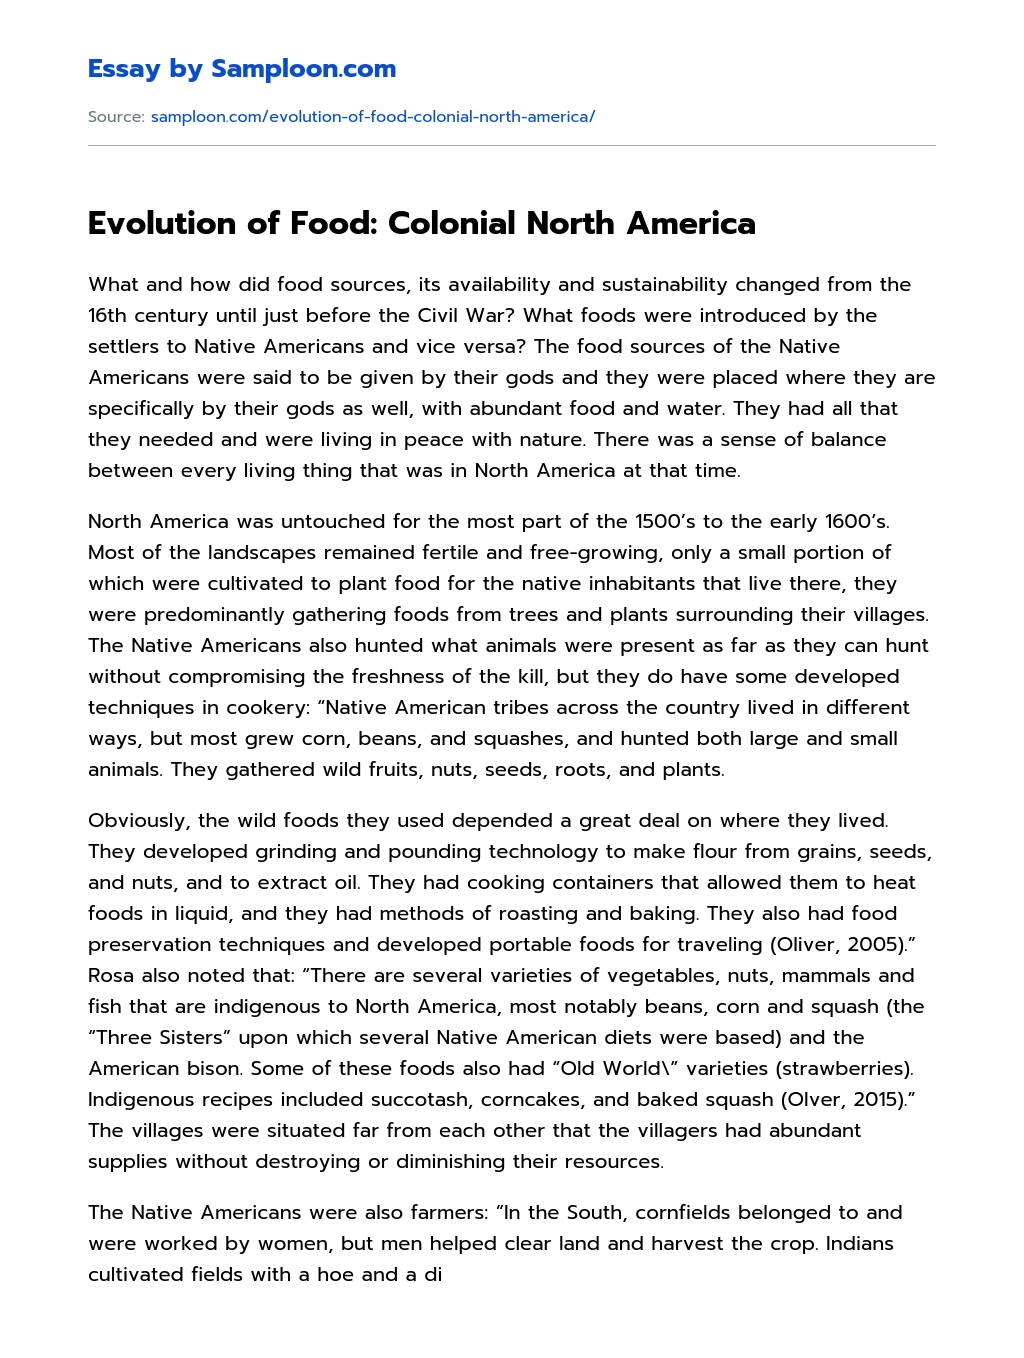 Evolution of Food: Colonial North America essay